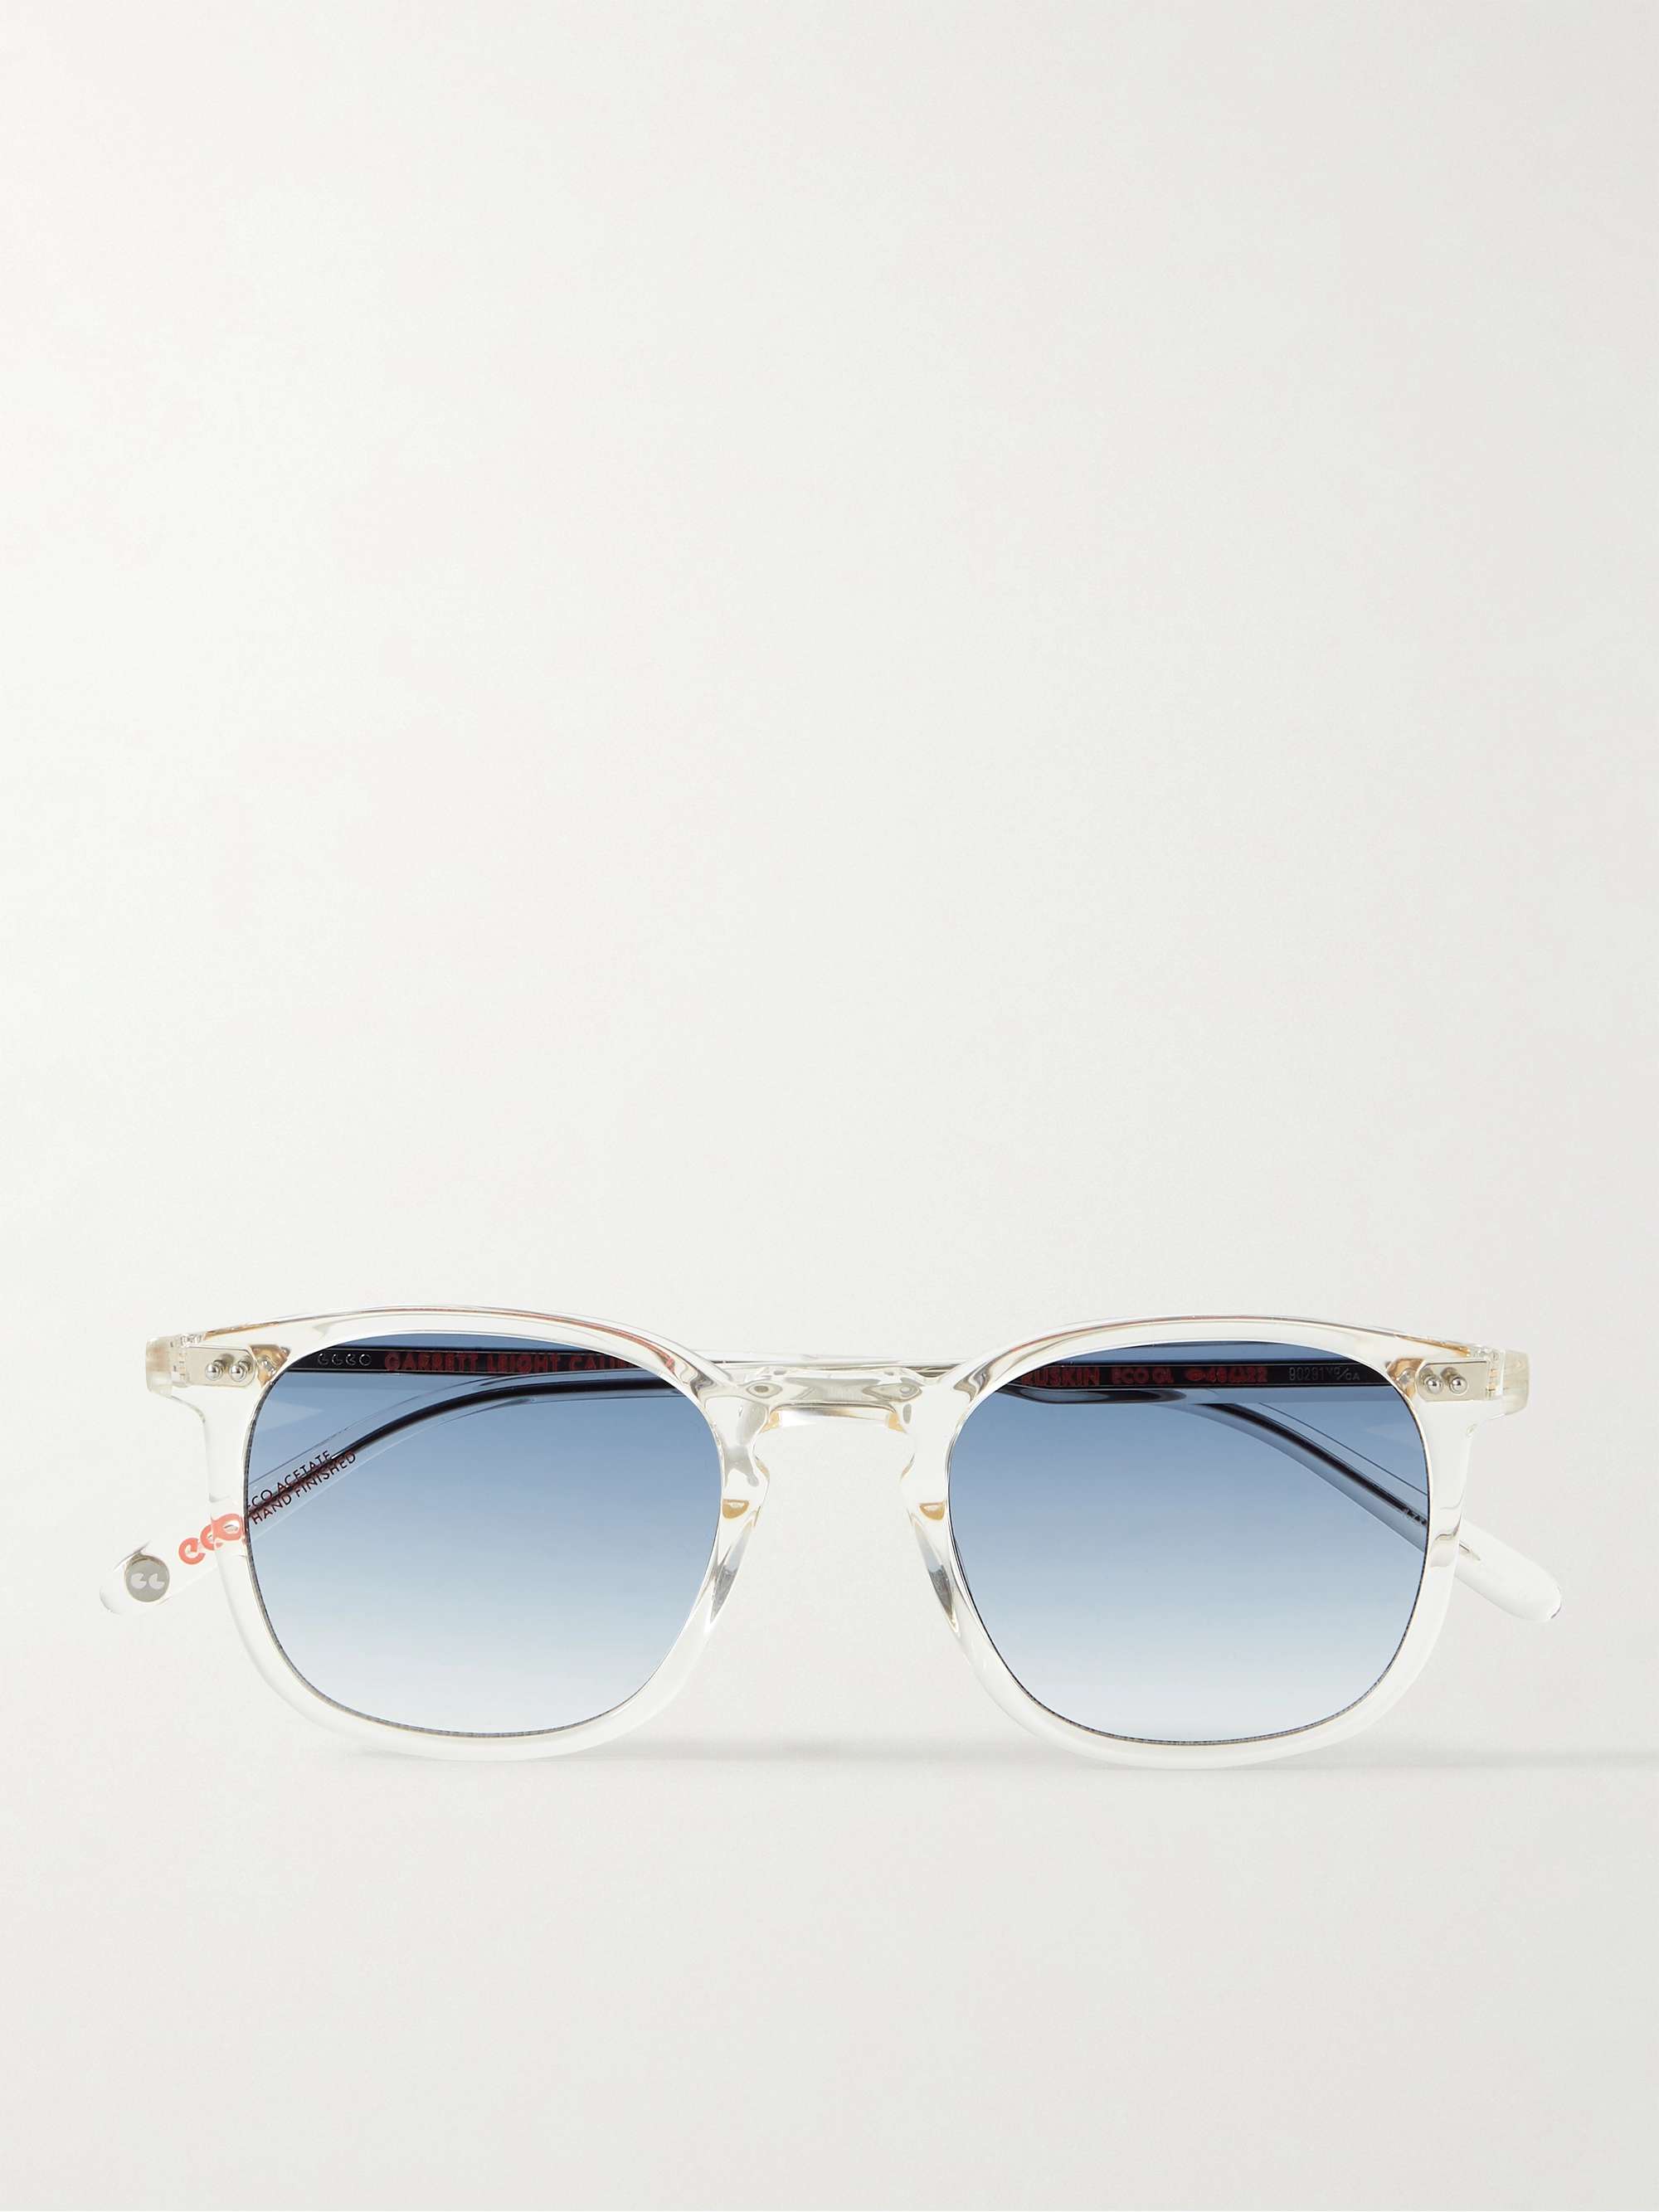 GARRETT LEIGHT CALIFORNIA OPTICAL Ruskin 48 D-Frame Acetate Sunglasses